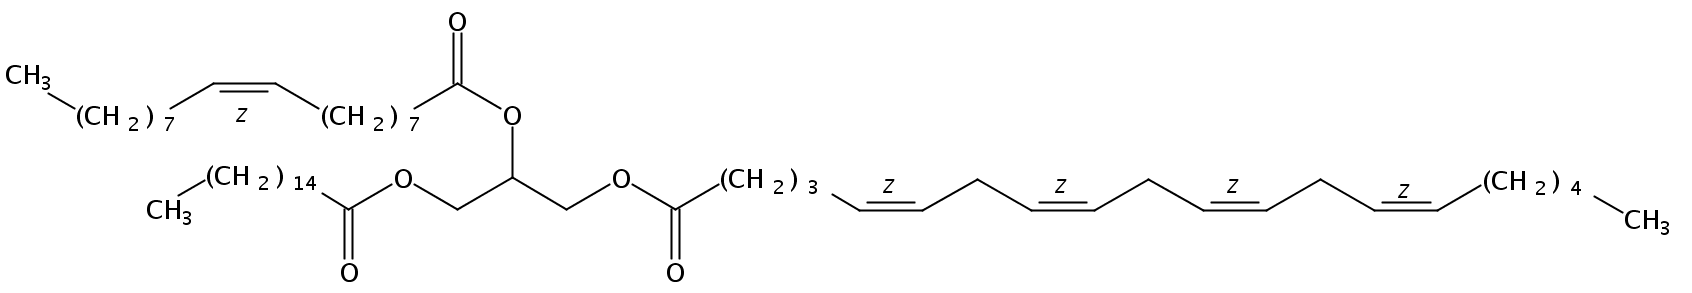 Structural formula of 1-Palmitin-2-Olein-3-Arachidonin